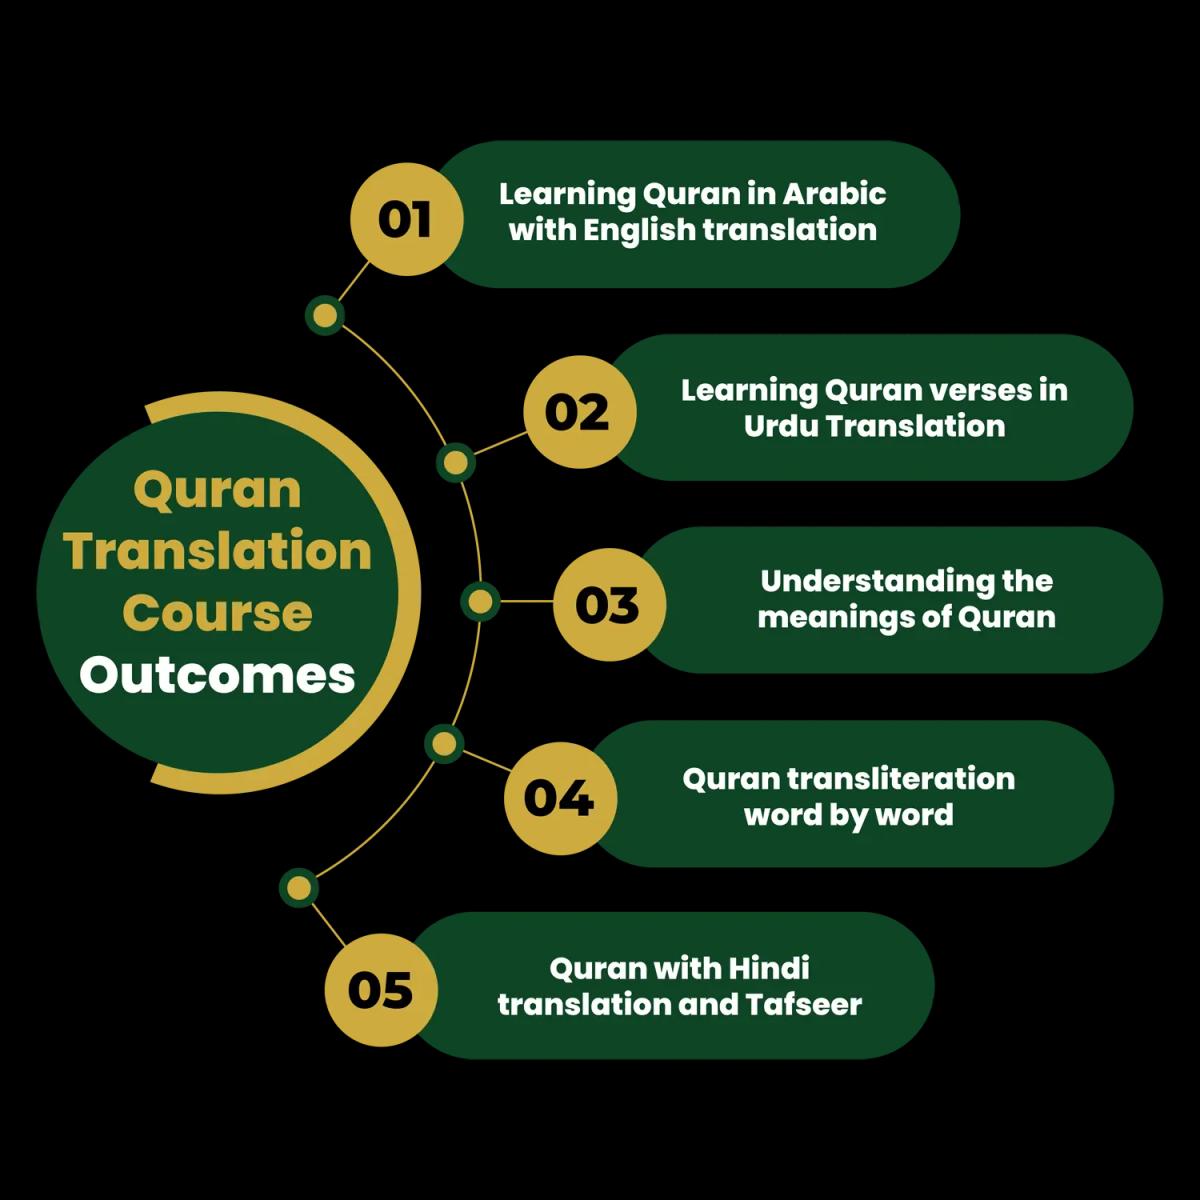 Quran translation course outcomes